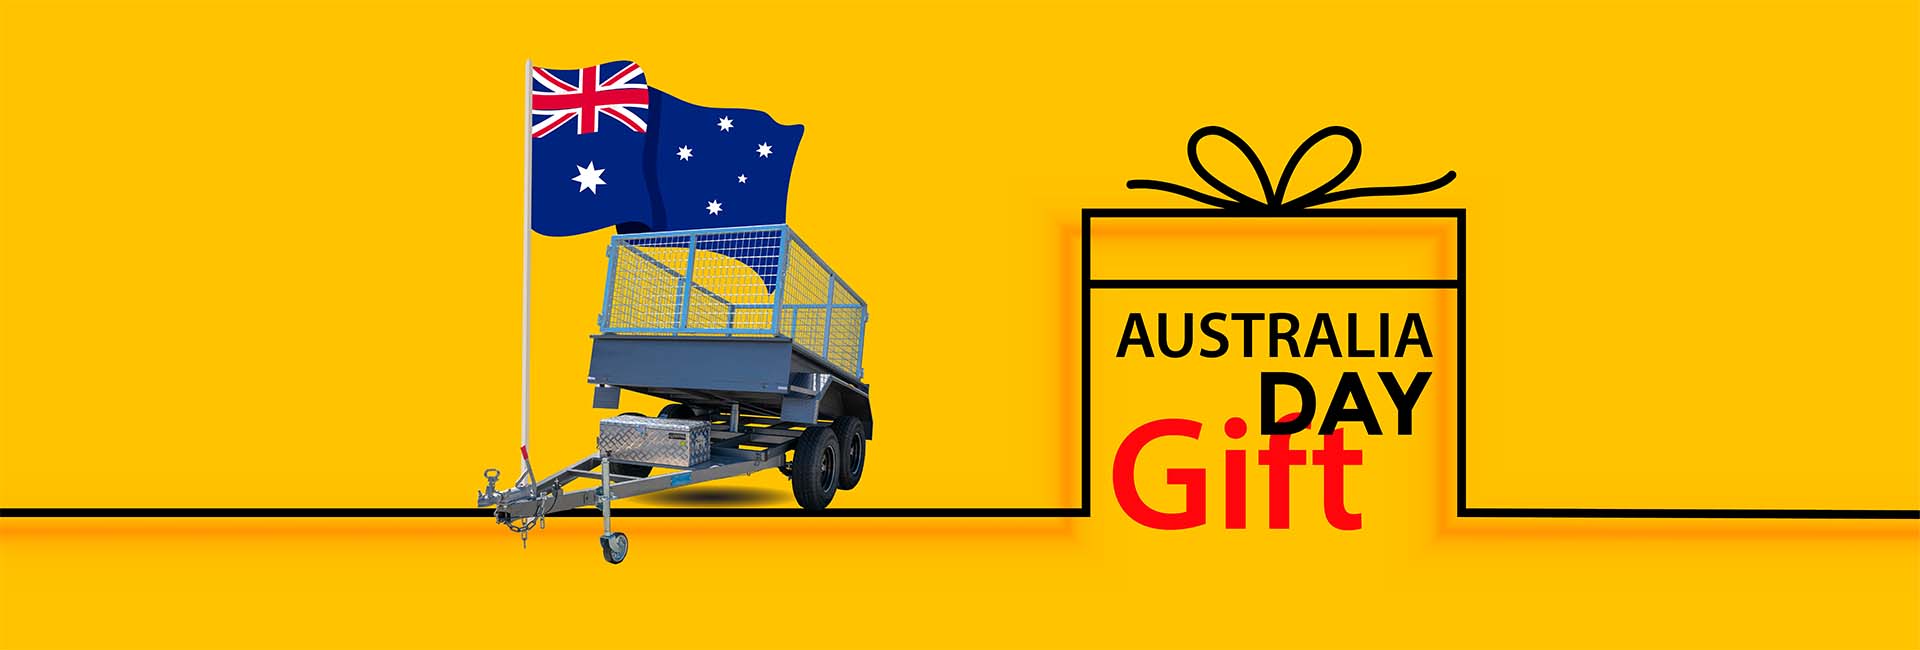 Australia Day Gift: Free tipper trailer